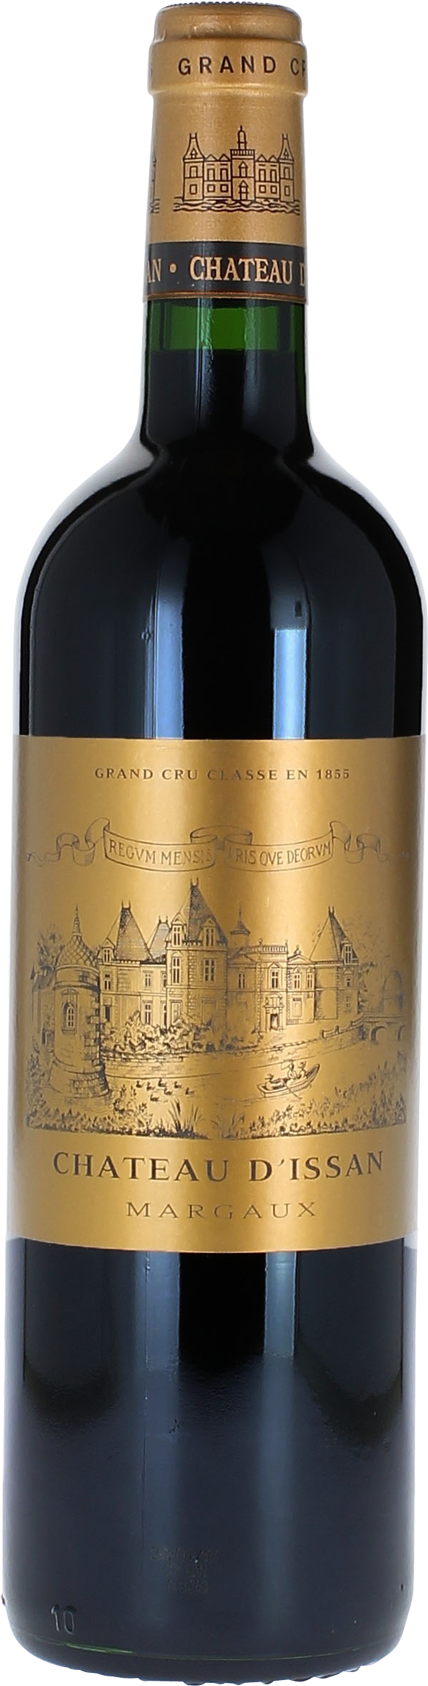 Issan 2016 3me Grand cru class Margaux, Bordeaux rouge